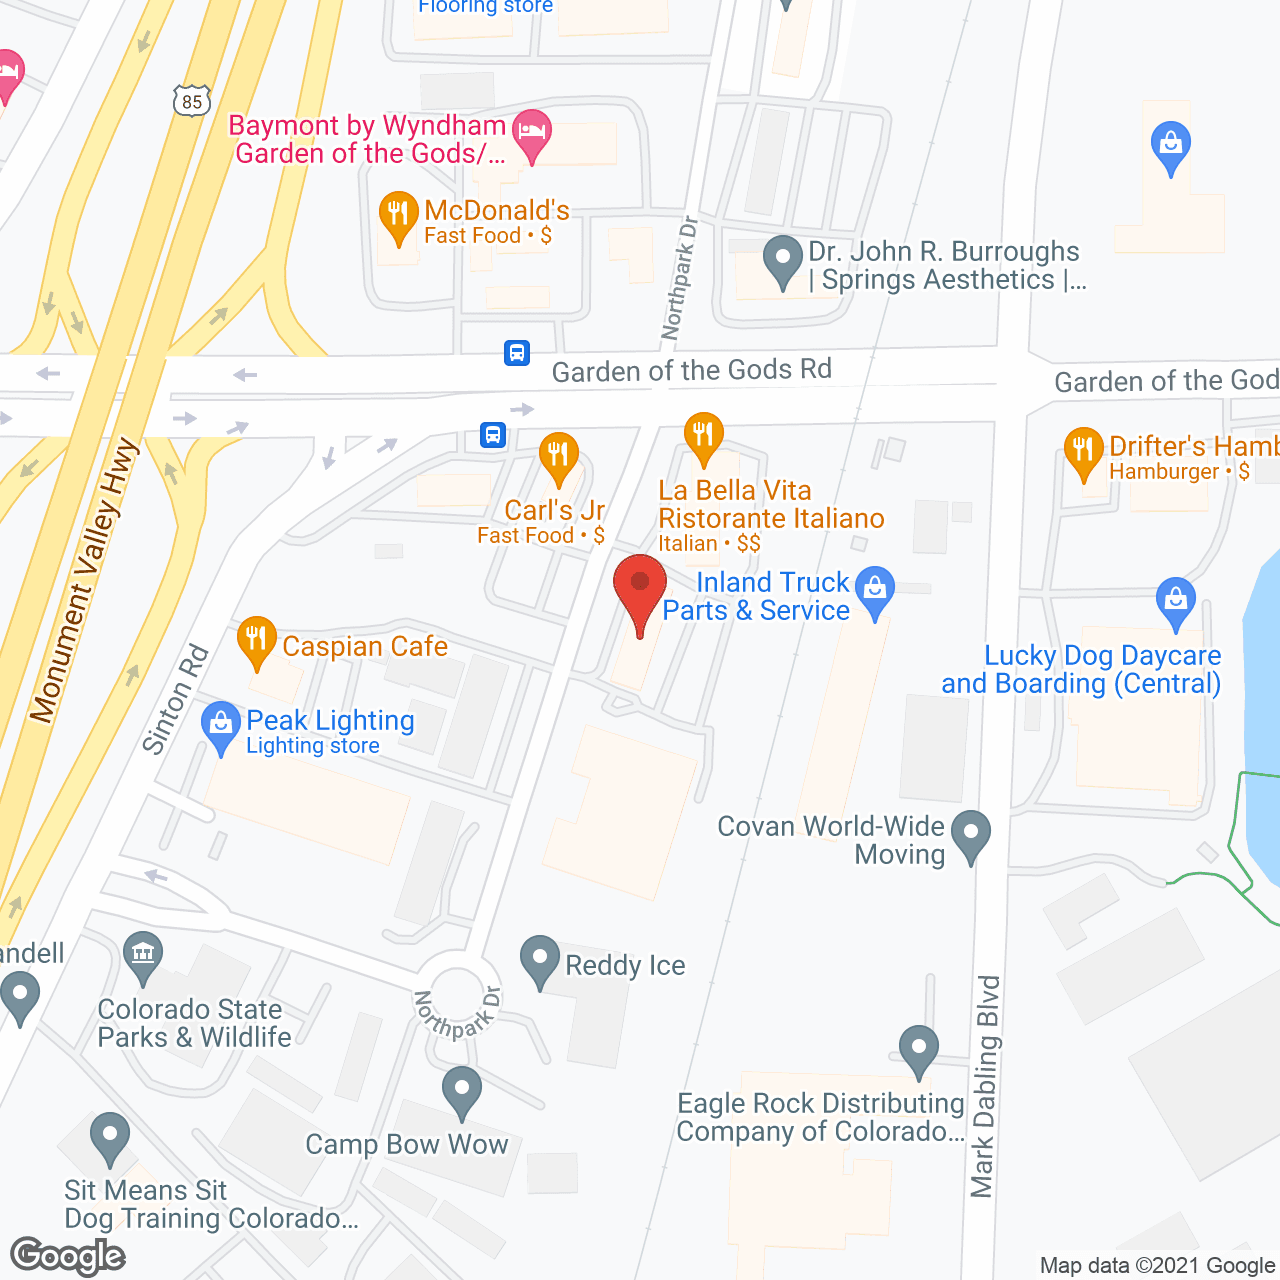 Enhanced Health Svc in google map